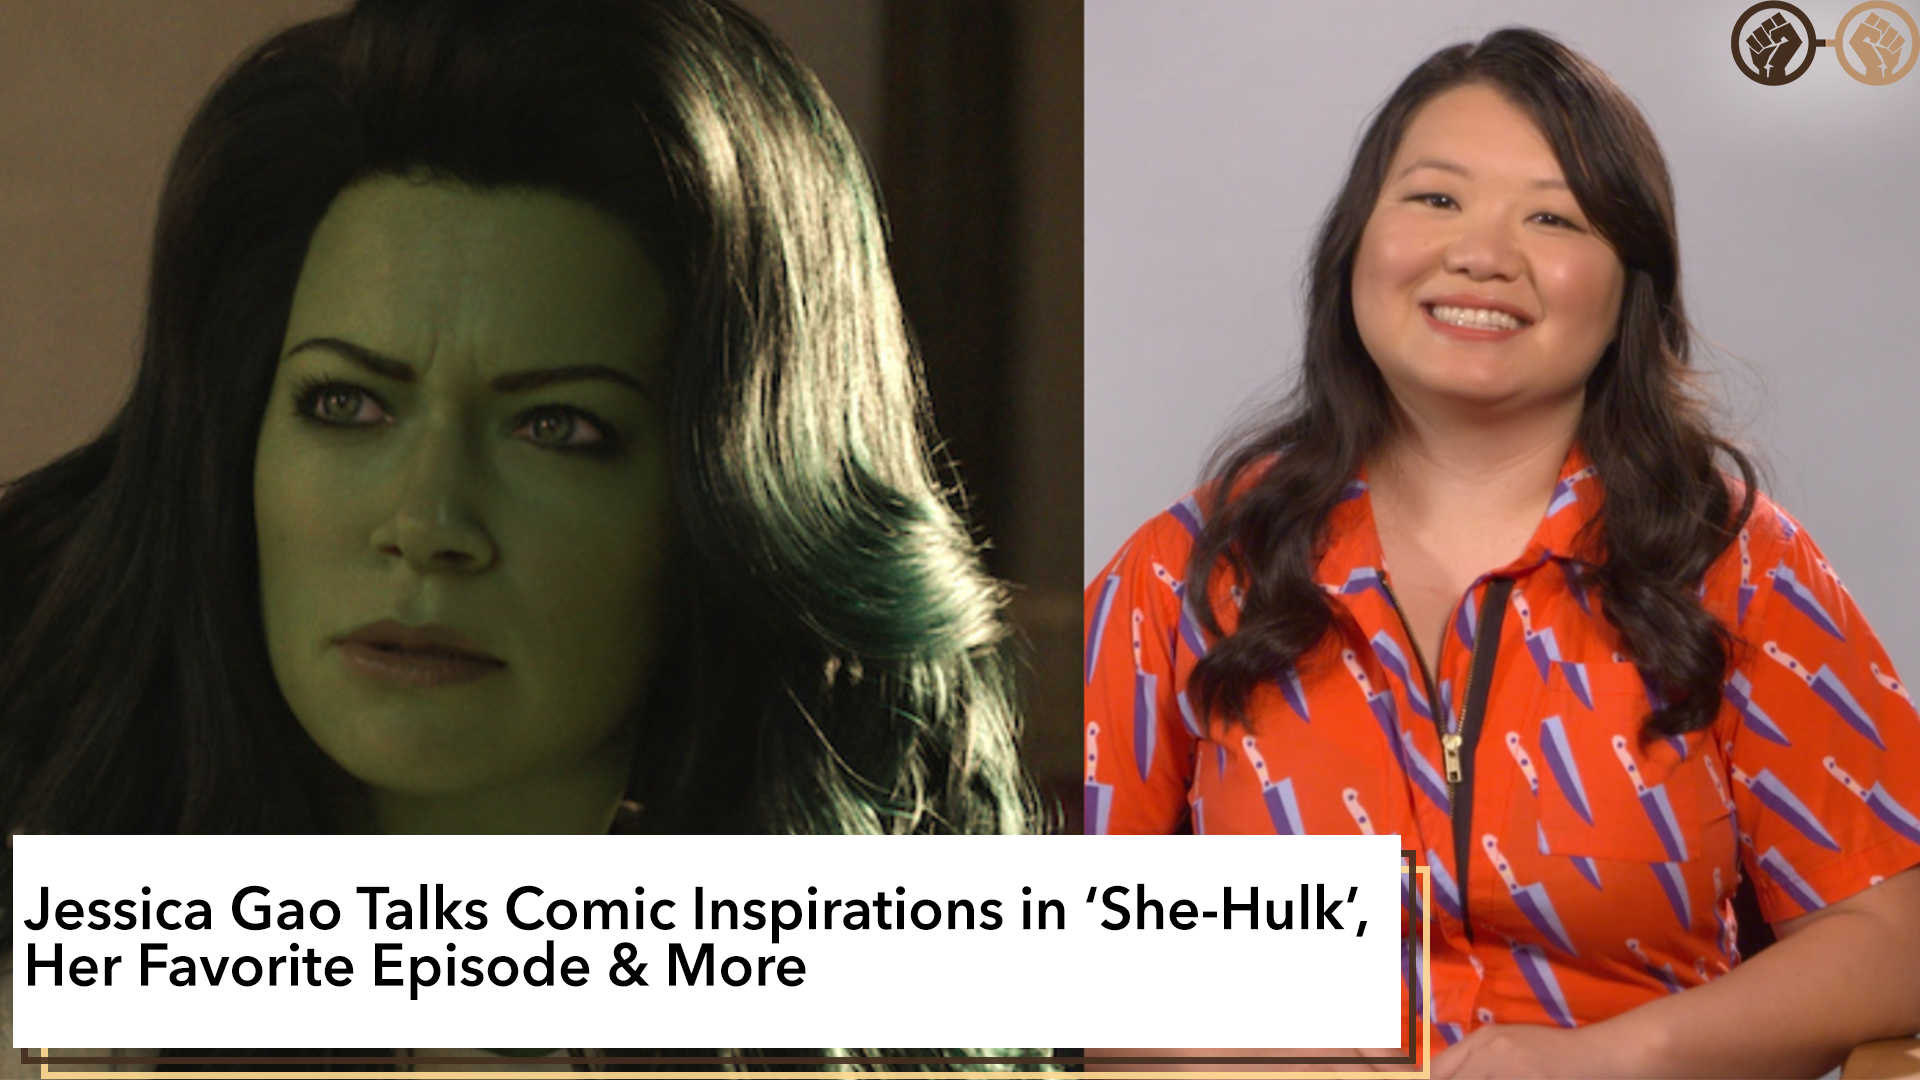 Interview: ‘She-Hulk’ Writer Jessica Gao Talks Comic Inspirations, Her Favorite Episode & More